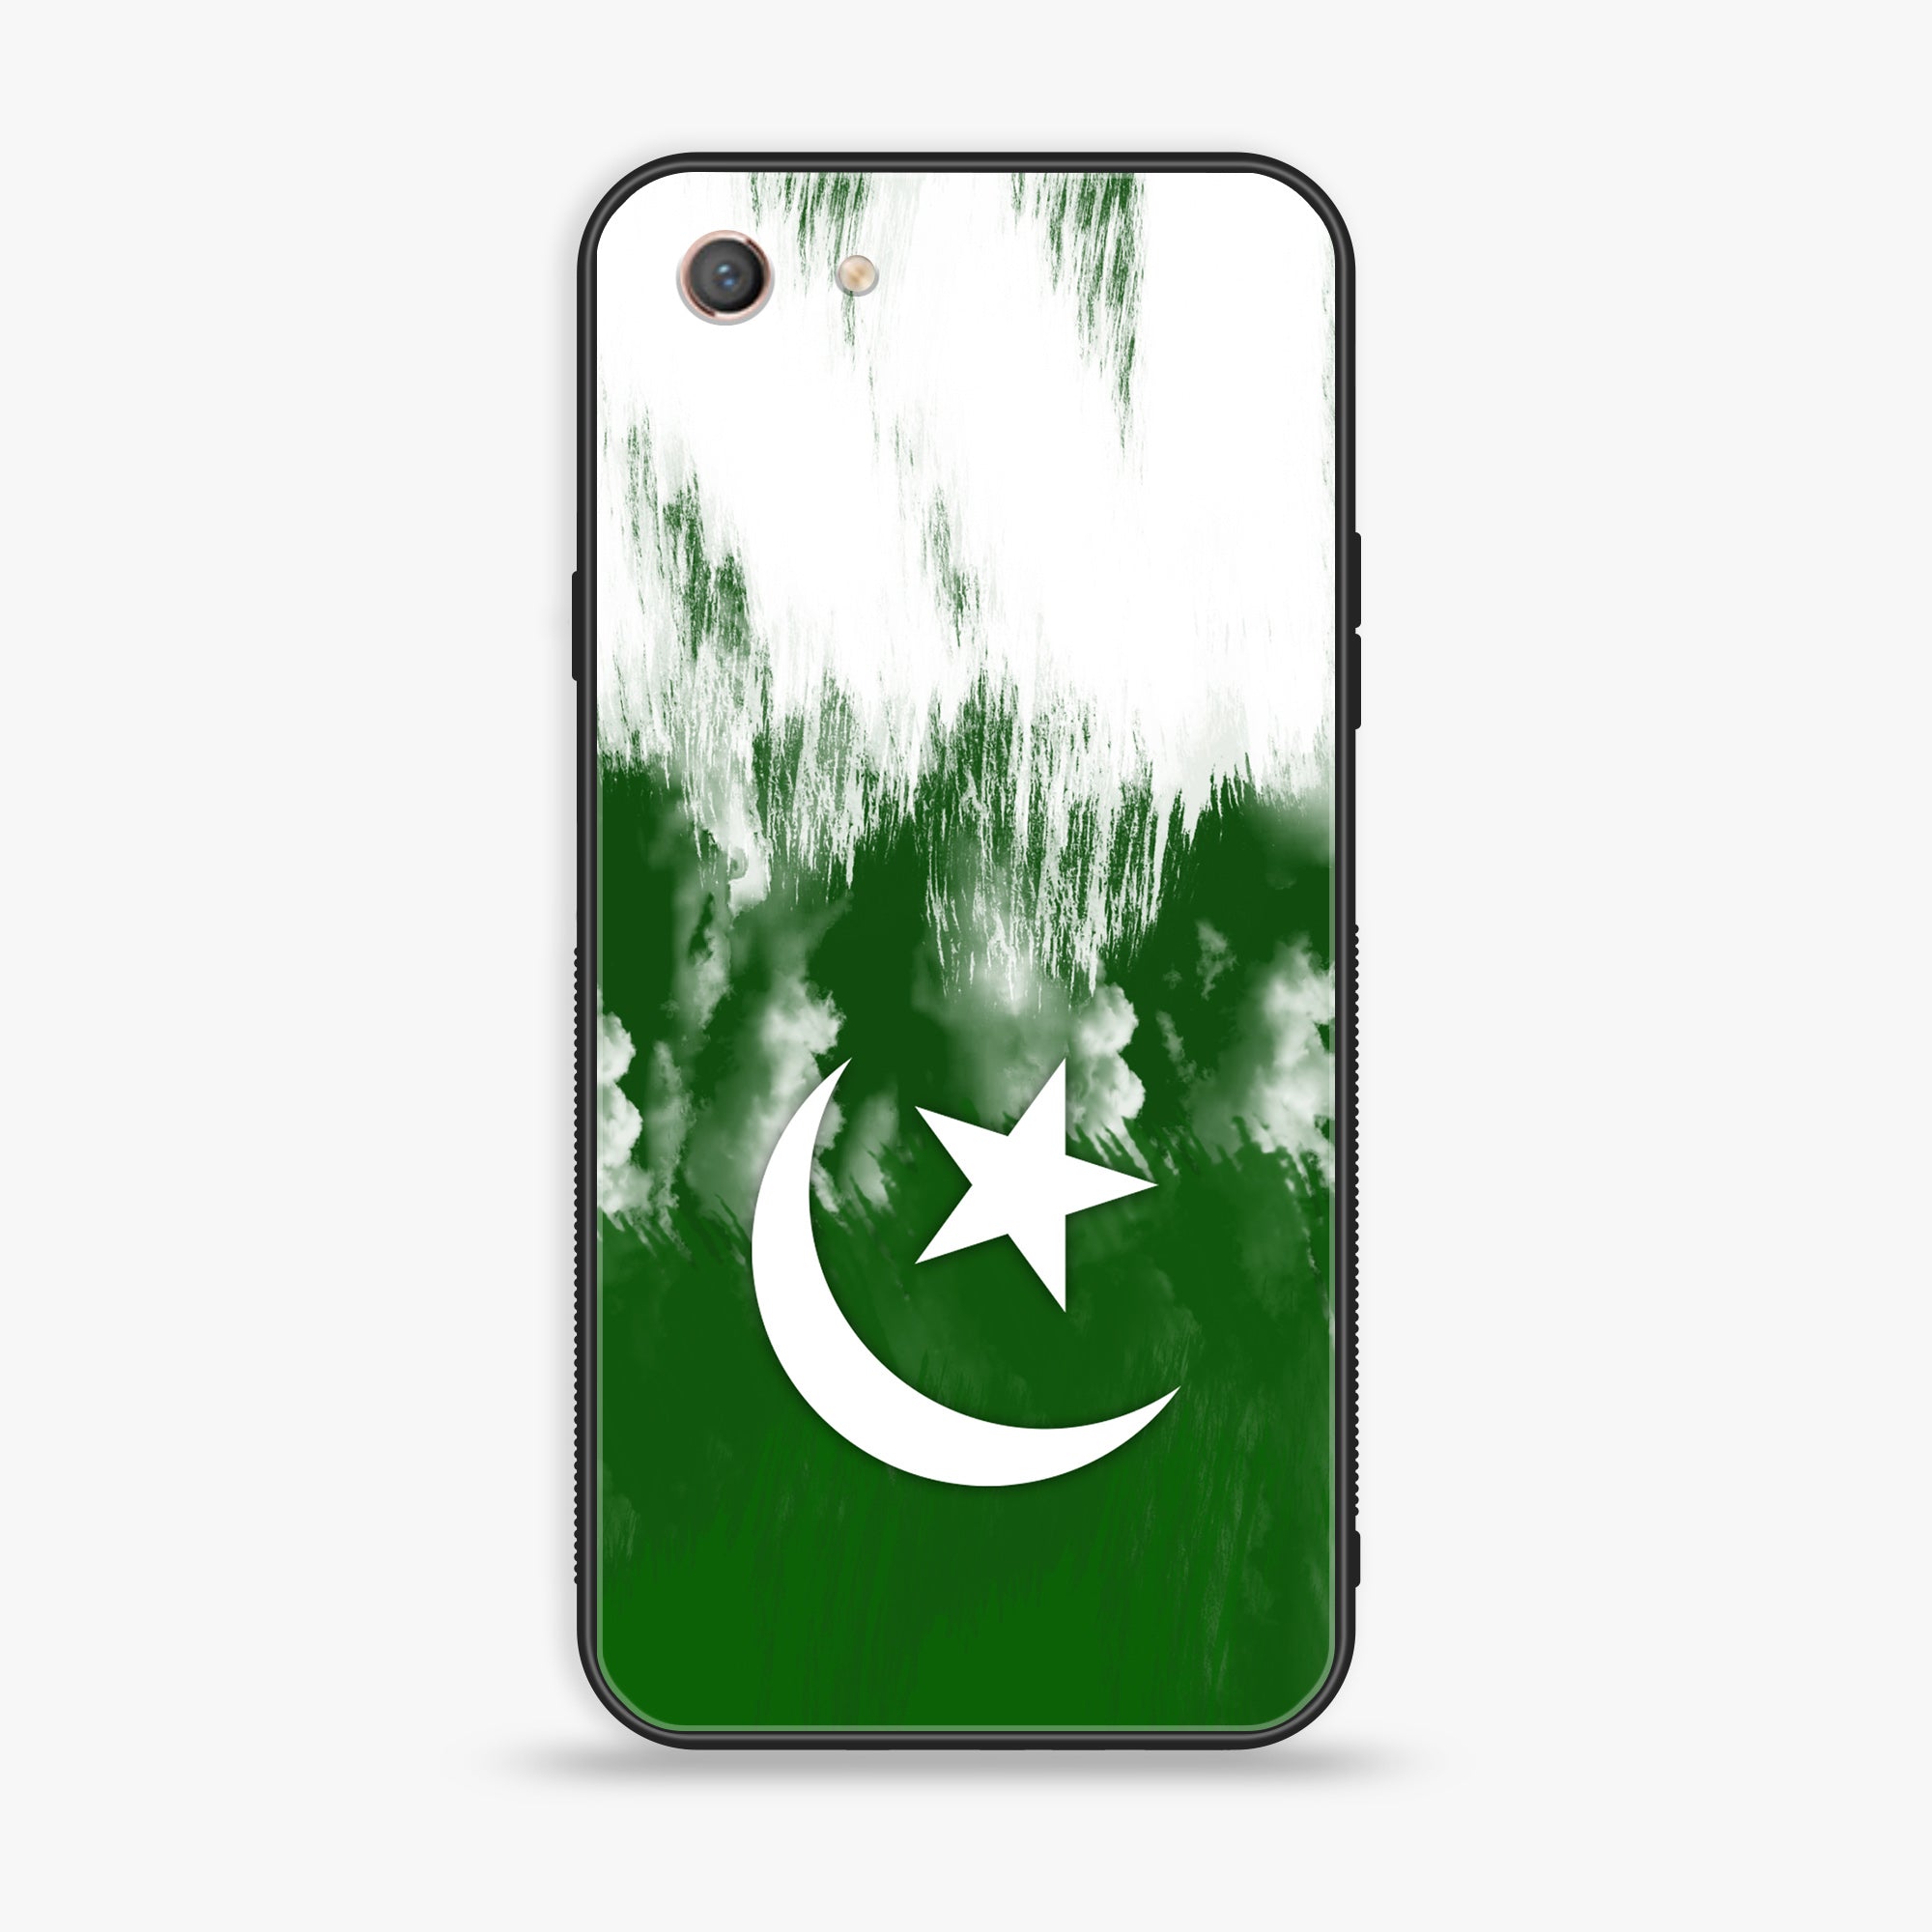 Oppo A71 (2017)  - Pakistani Flag Series - Premium Printed Glass soft Bumper shock Proof Case